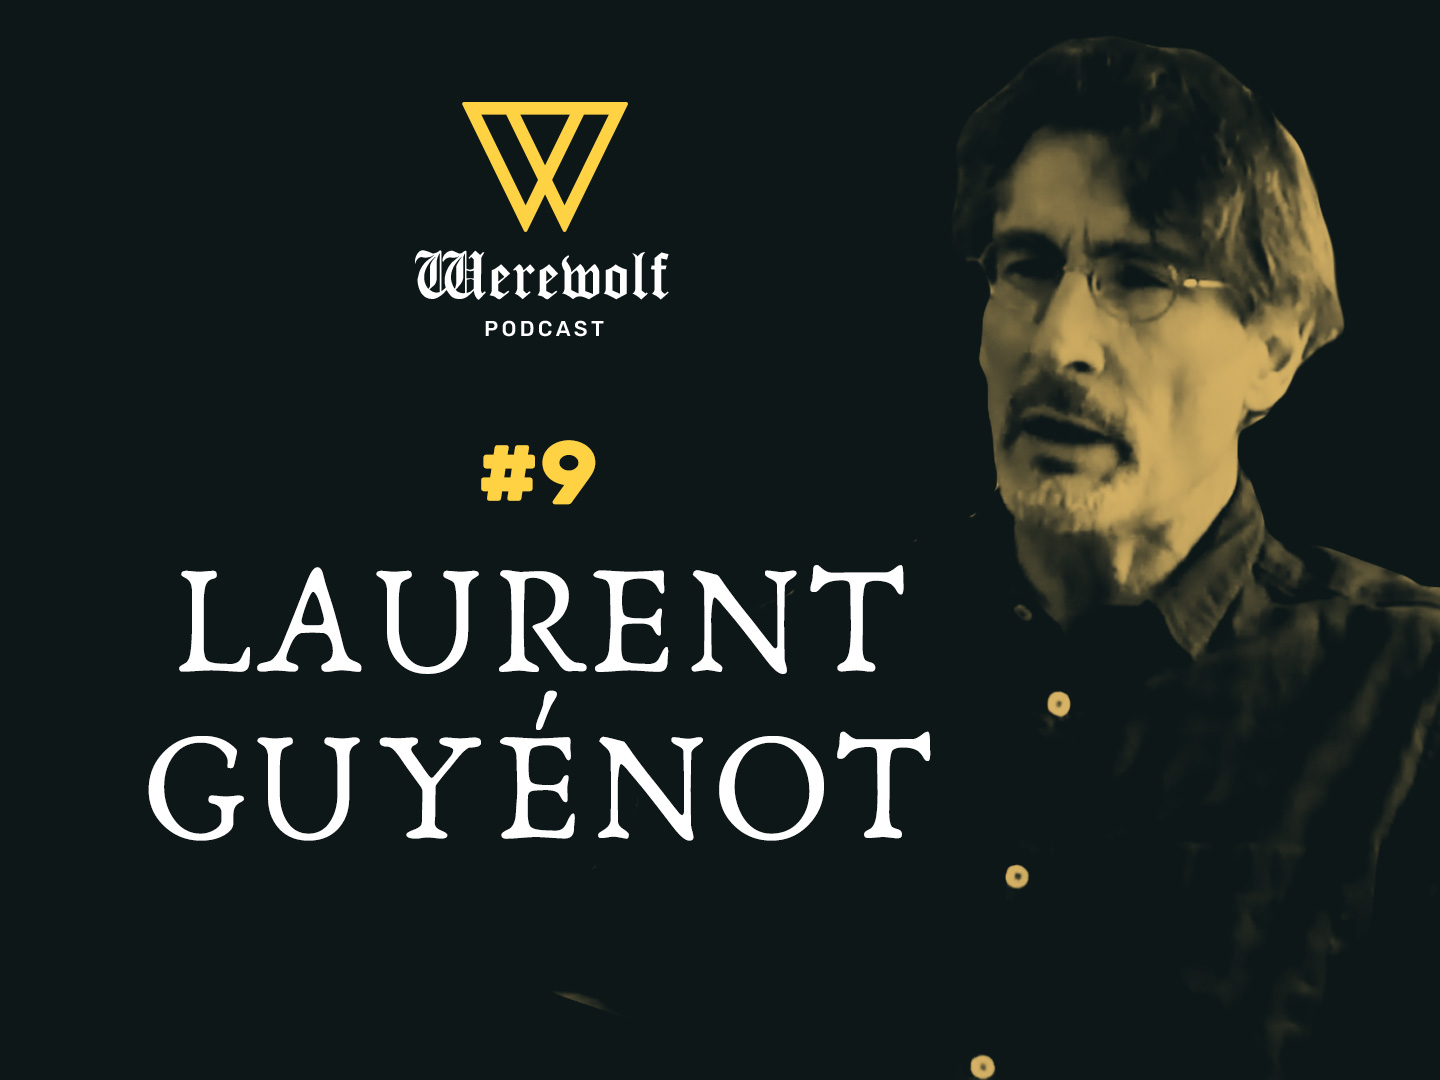 Werewolf Podcast #9: Laurent Guyénot